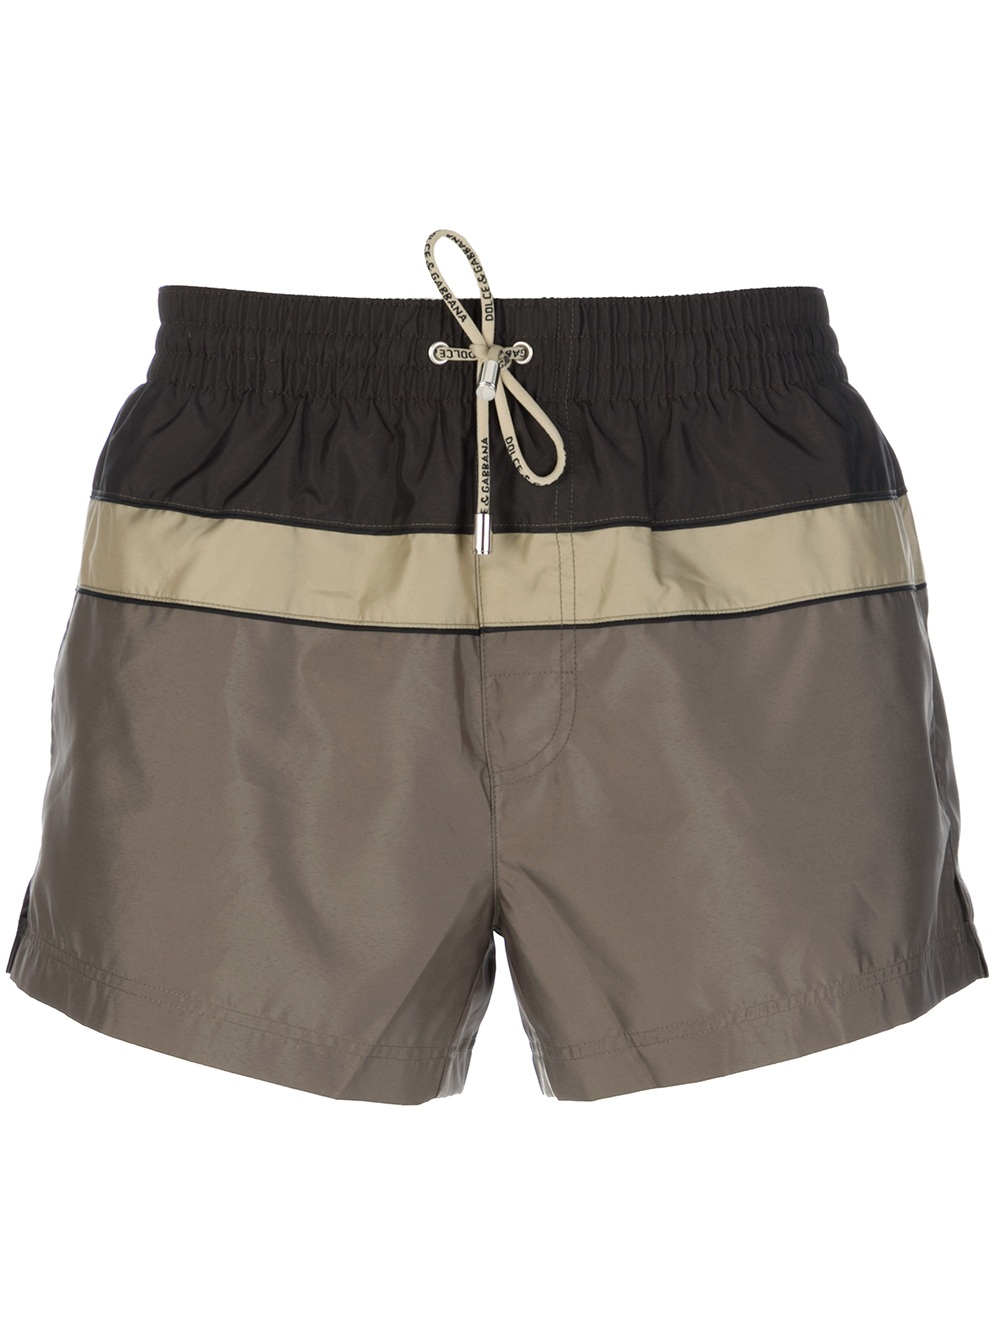 Dolce & Gabbana Swim Shorts in Brown for Men | Lyst